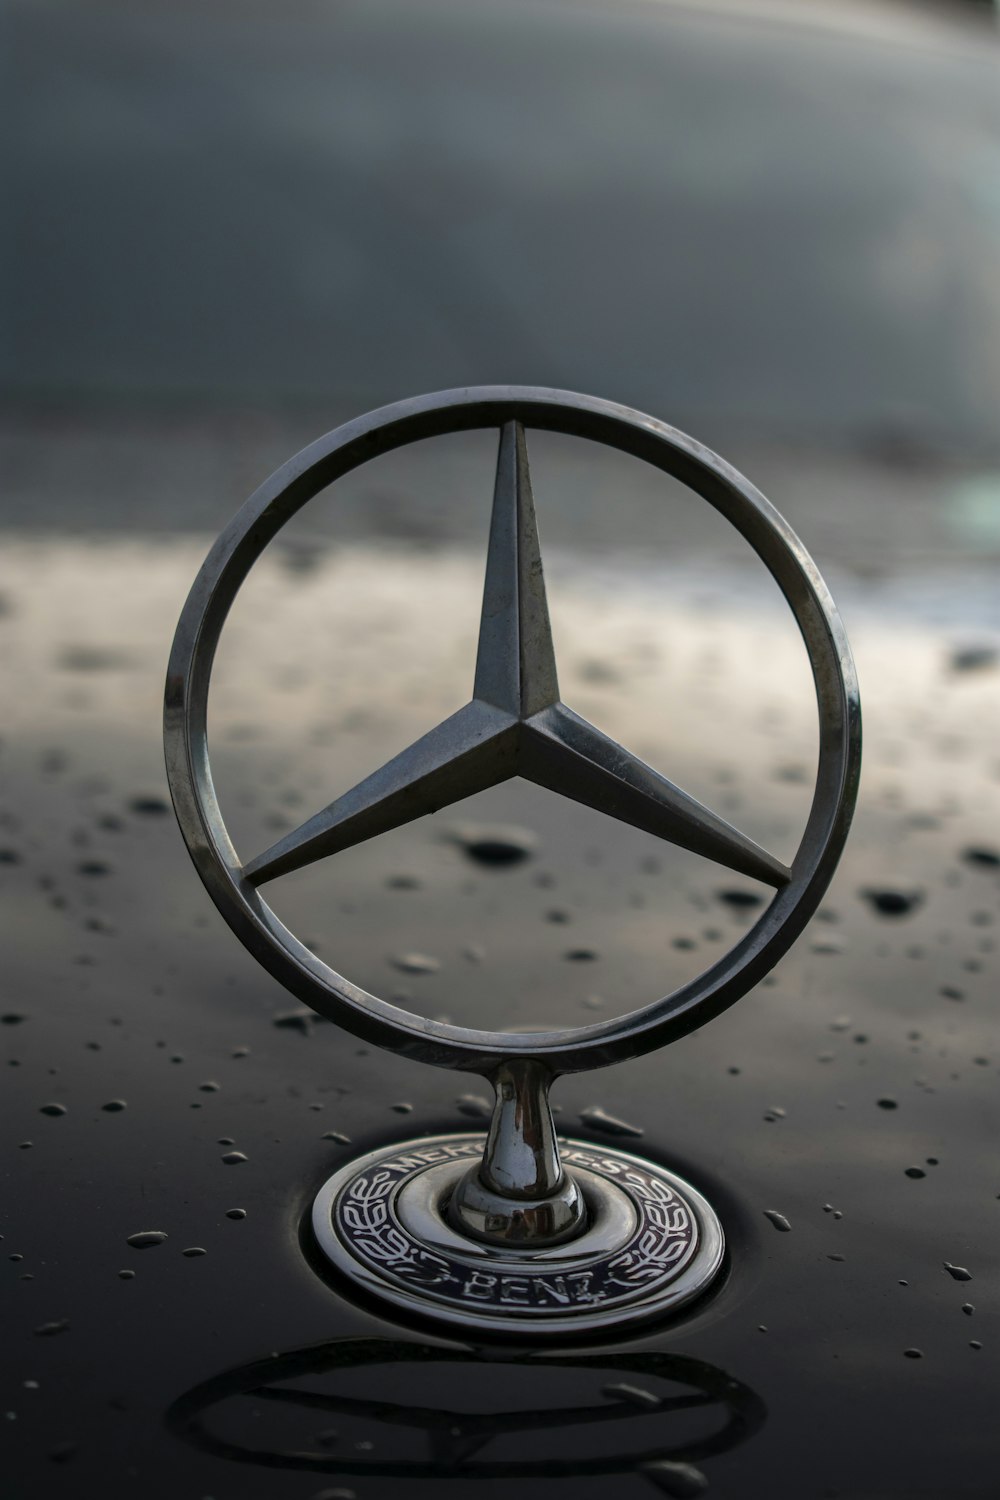 500+ Mercedes Benz Pictures | Download Free Images on Unsplash